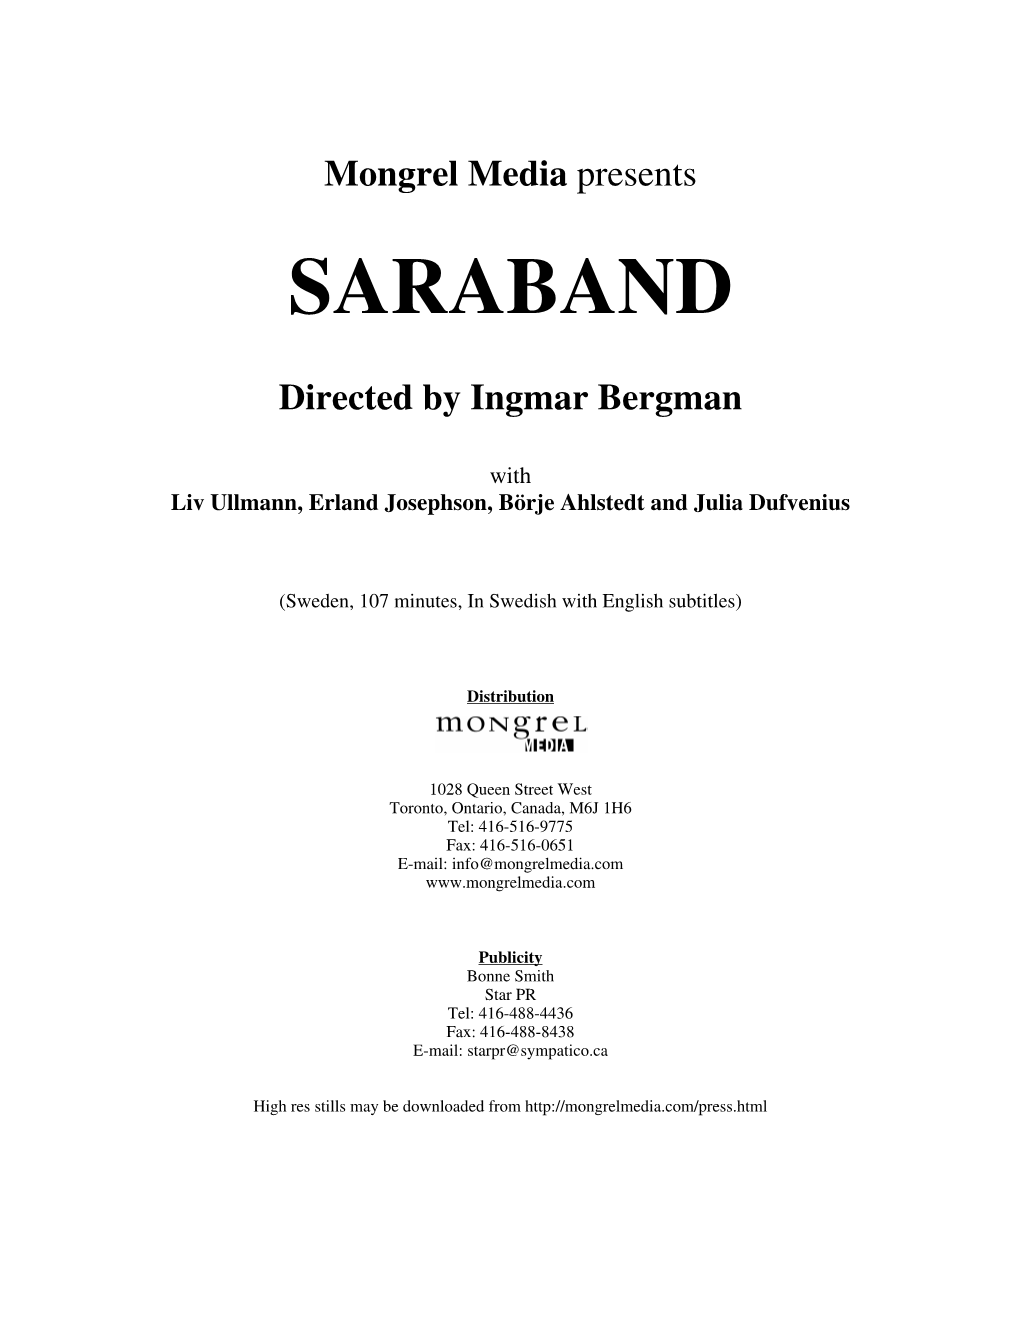 SARABAND Directed by Ingmar Bergman